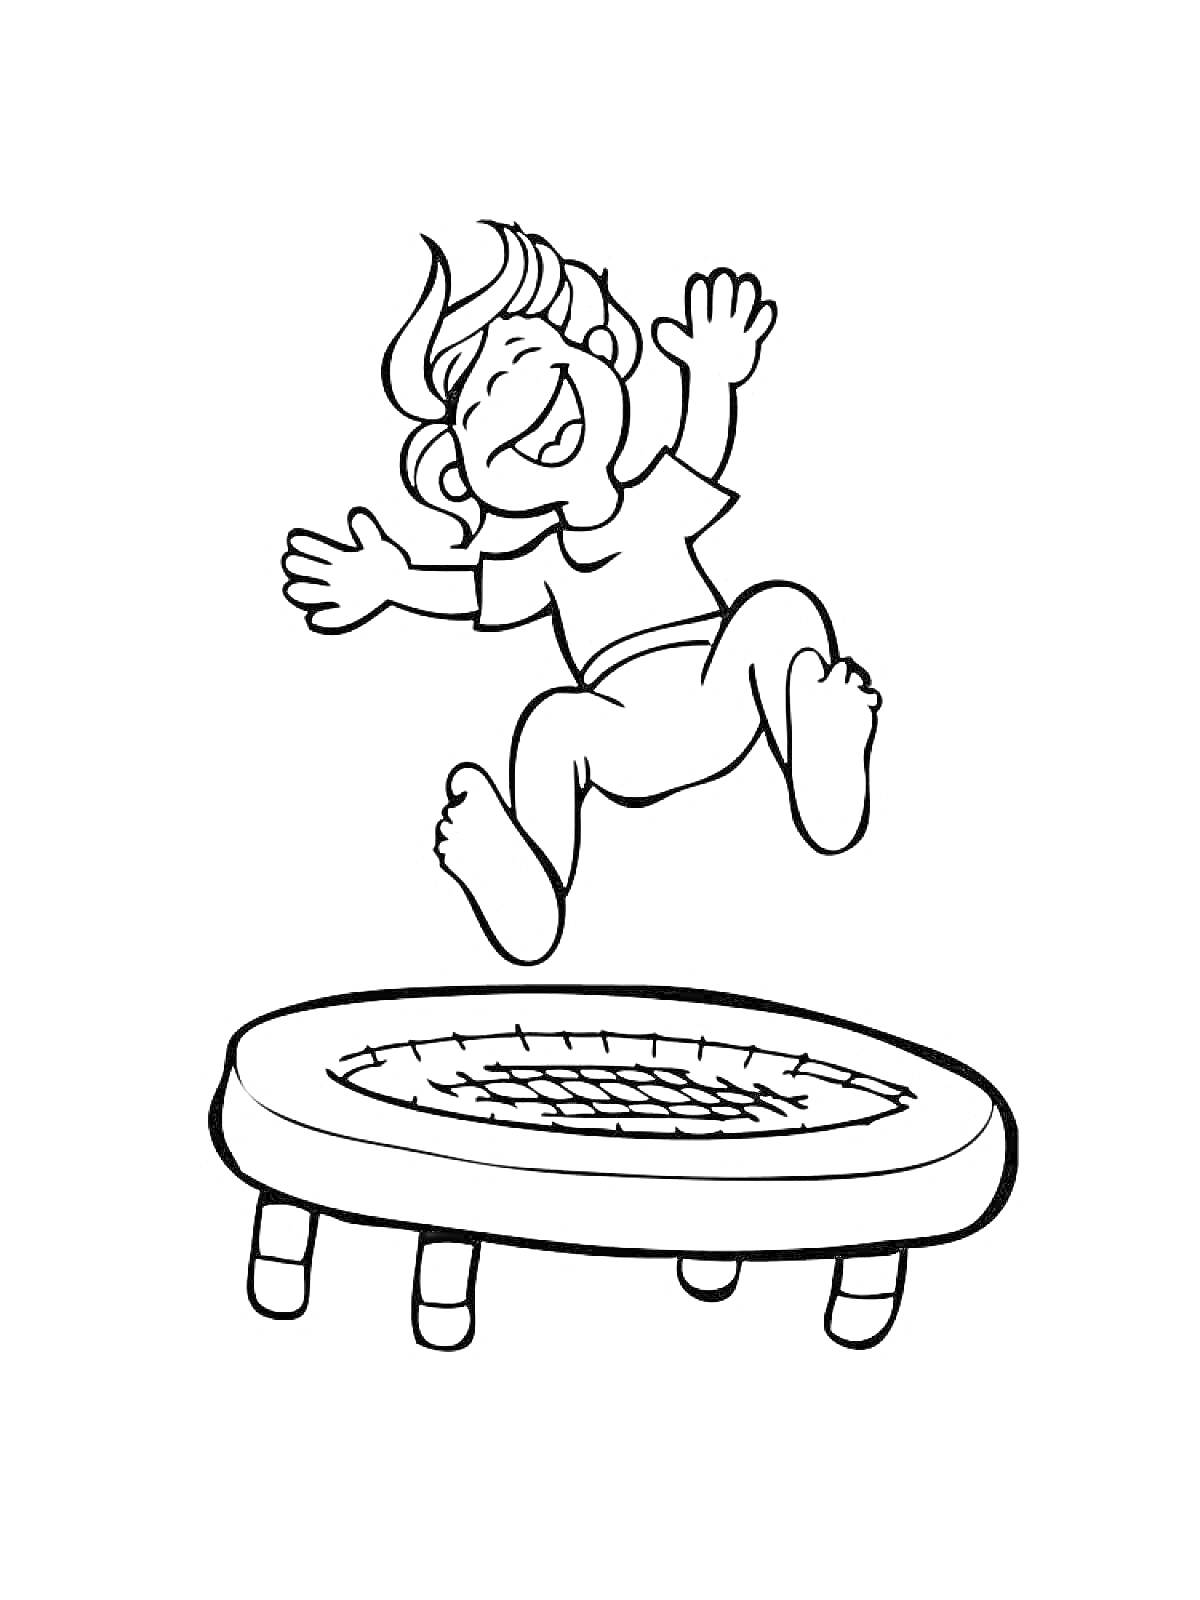 Раскраска Ребенок прыгает на батуте